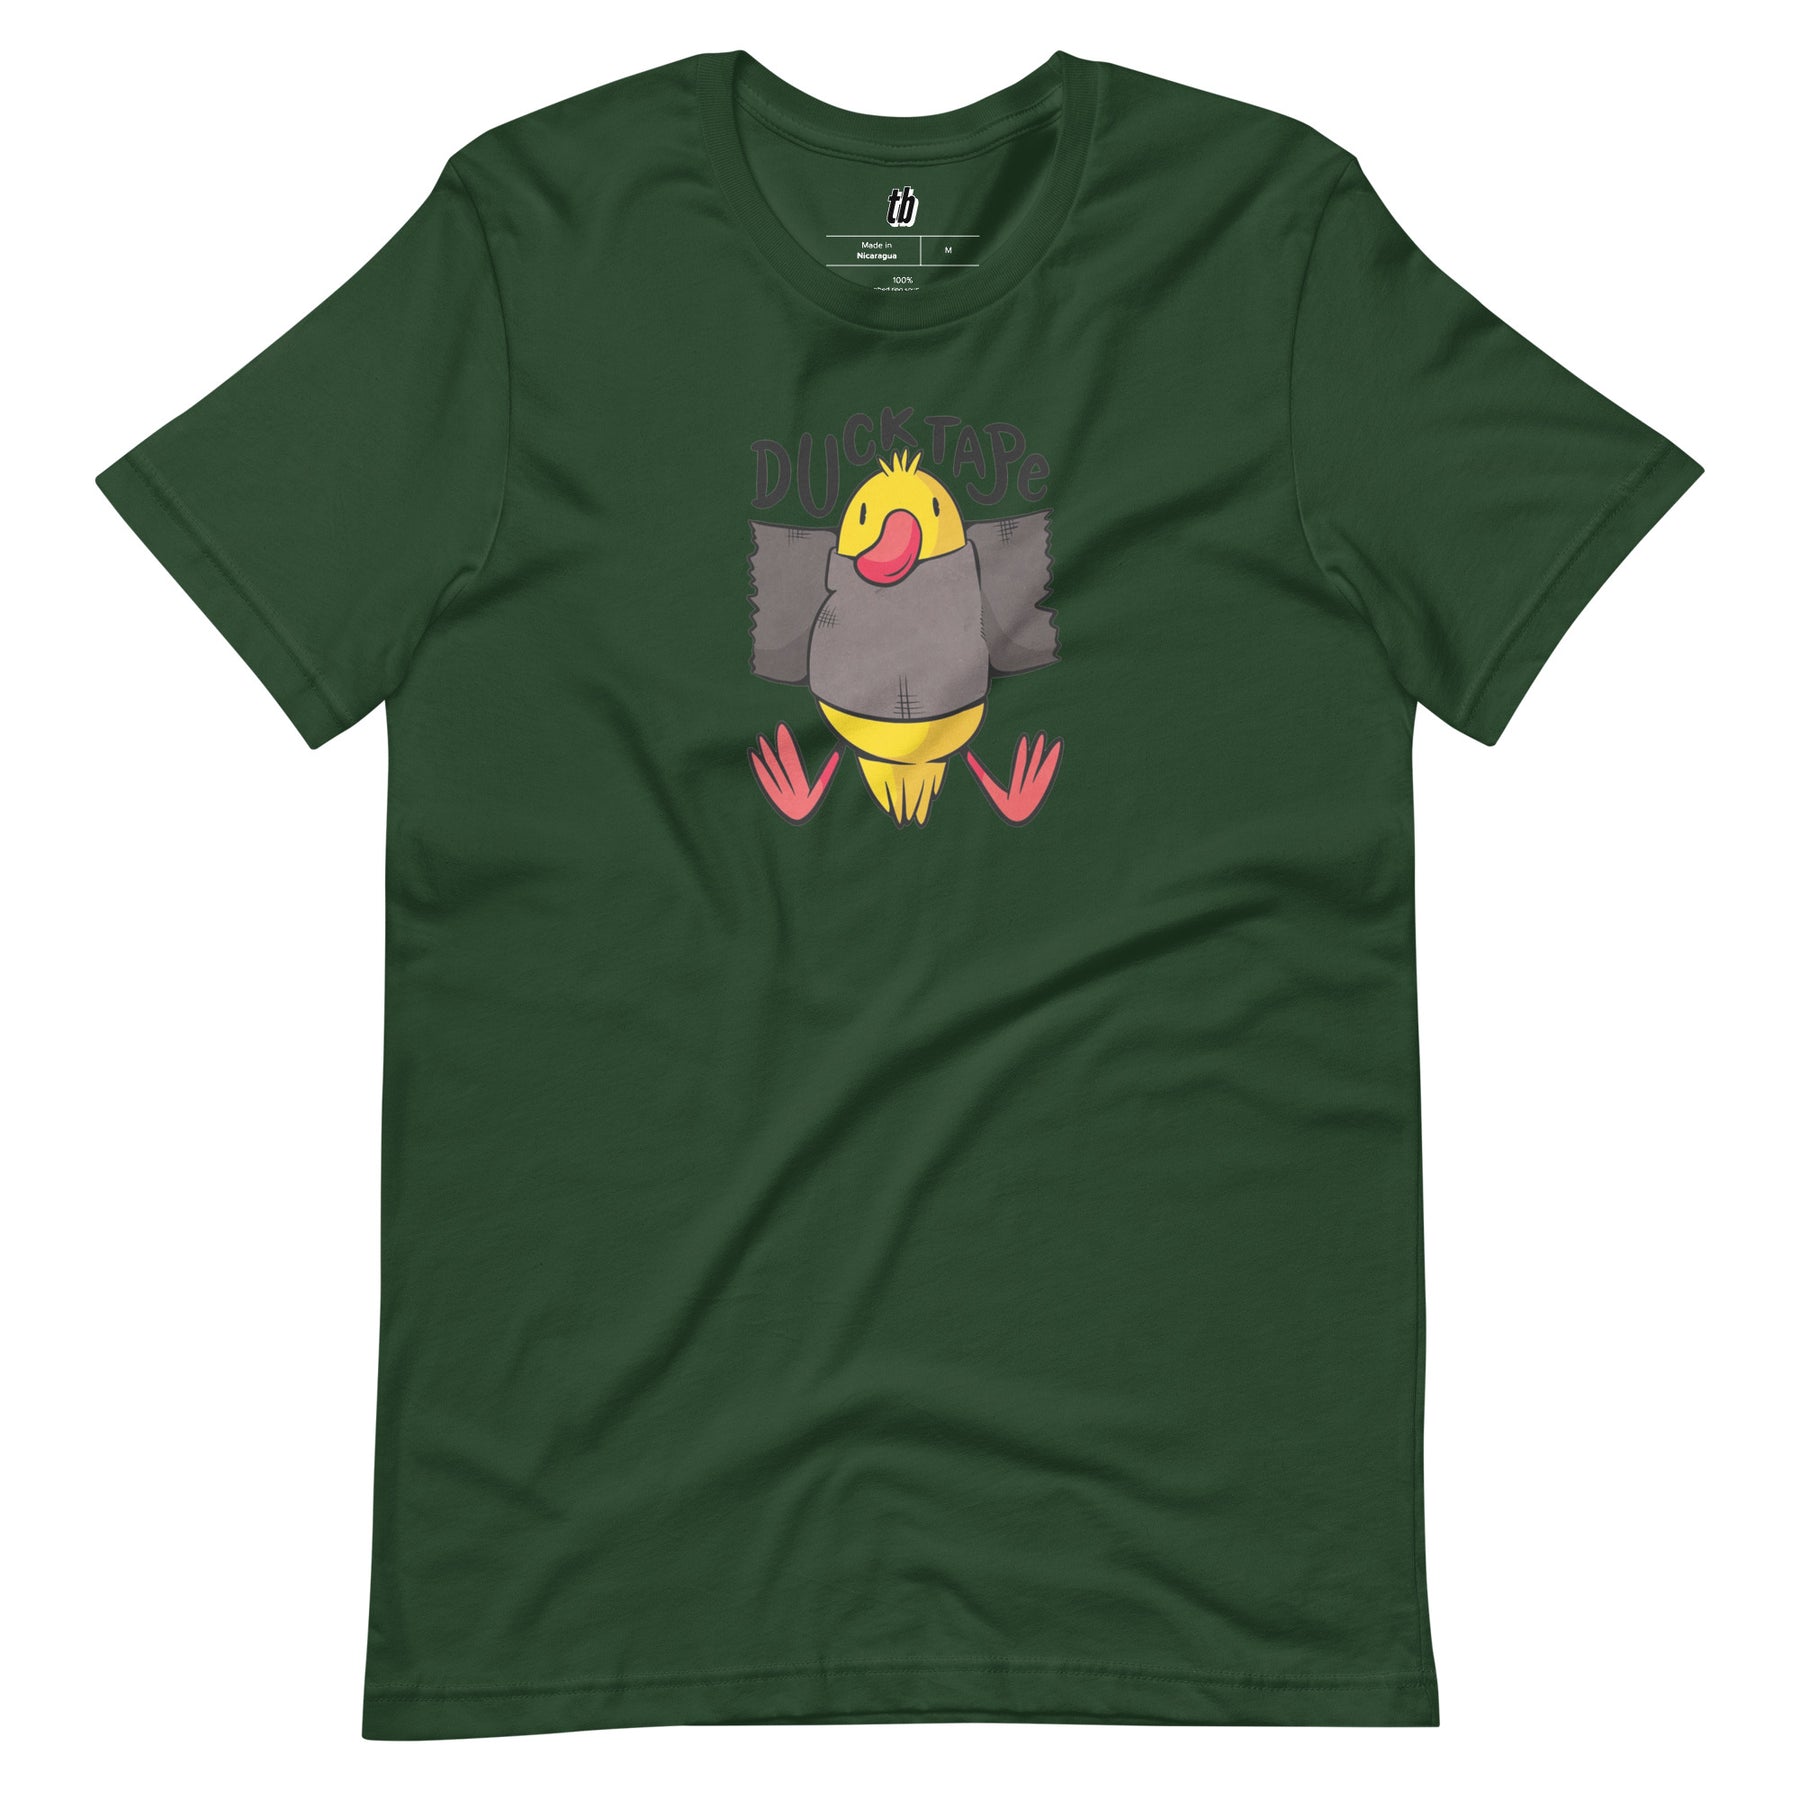 Duck Tape T-Shirt - Teebop